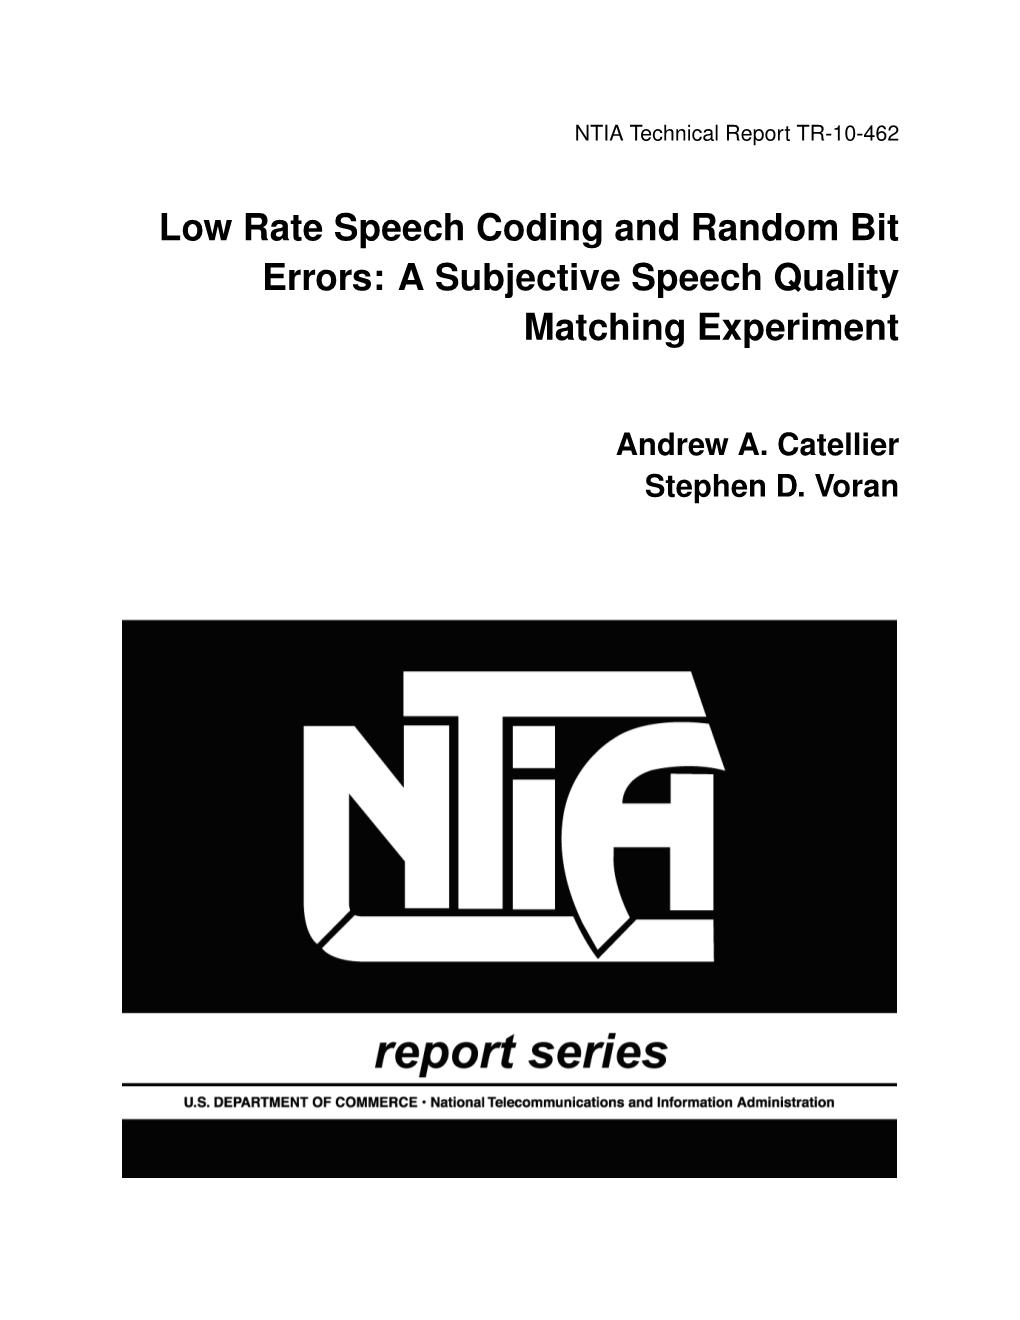 Low Rate Speech Coding and Random Bit Errors: a Subjective Speech Quality Matching Experiment